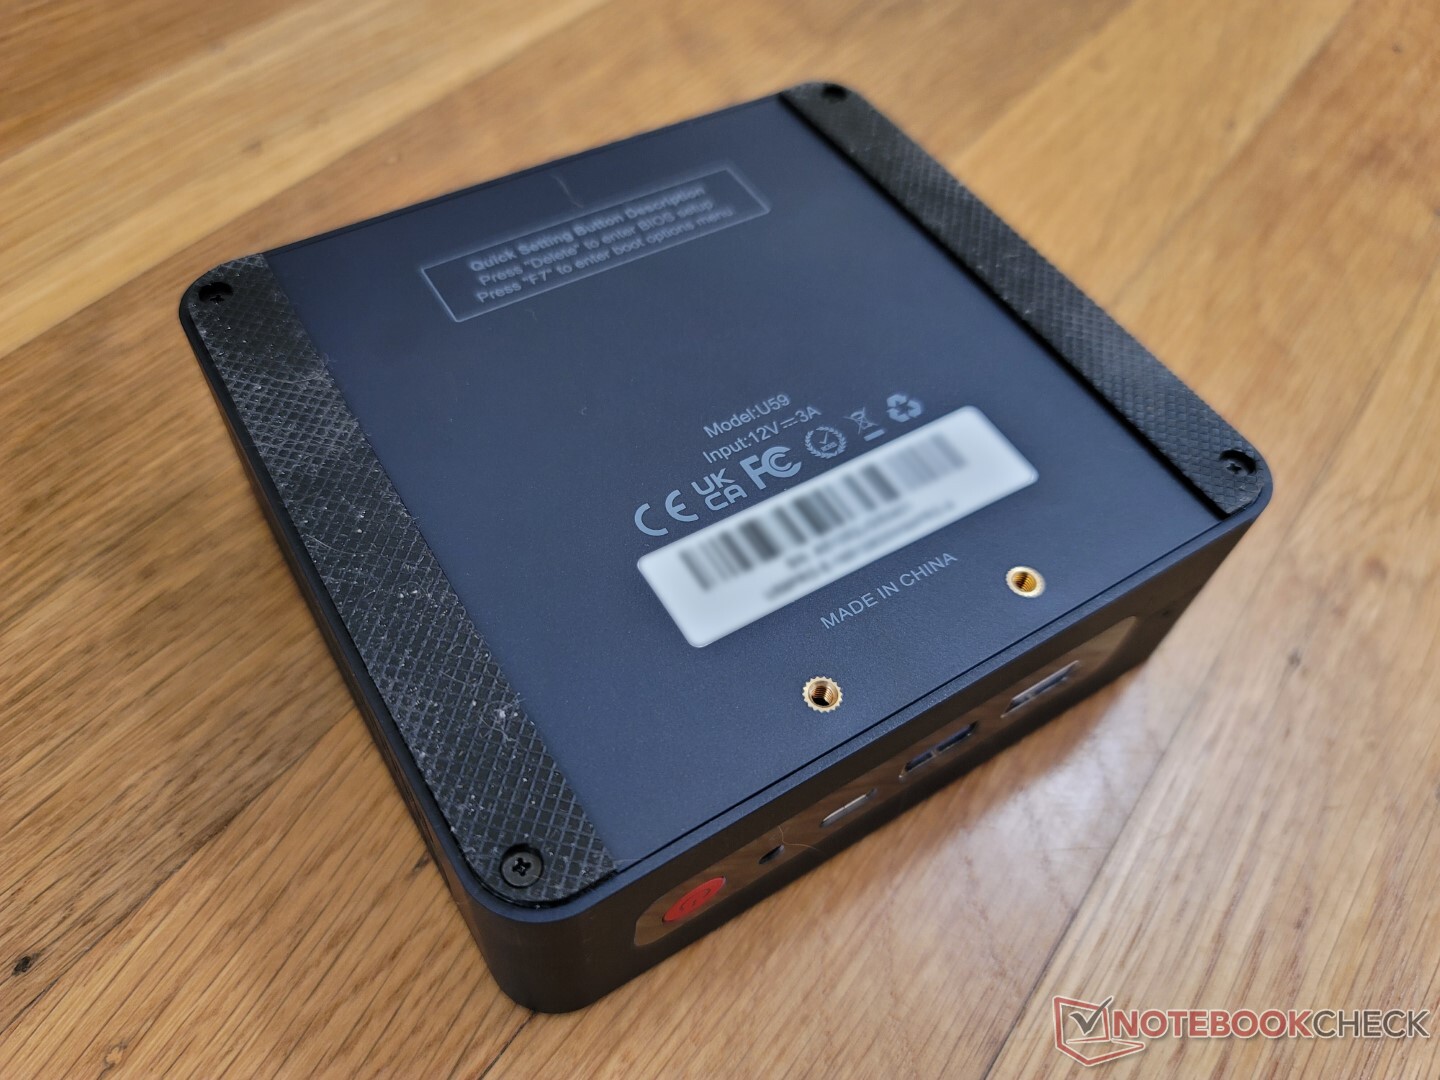 Celeron N5105 Jasper Lake debut: Beelink U59 mini PC review -   Reviews